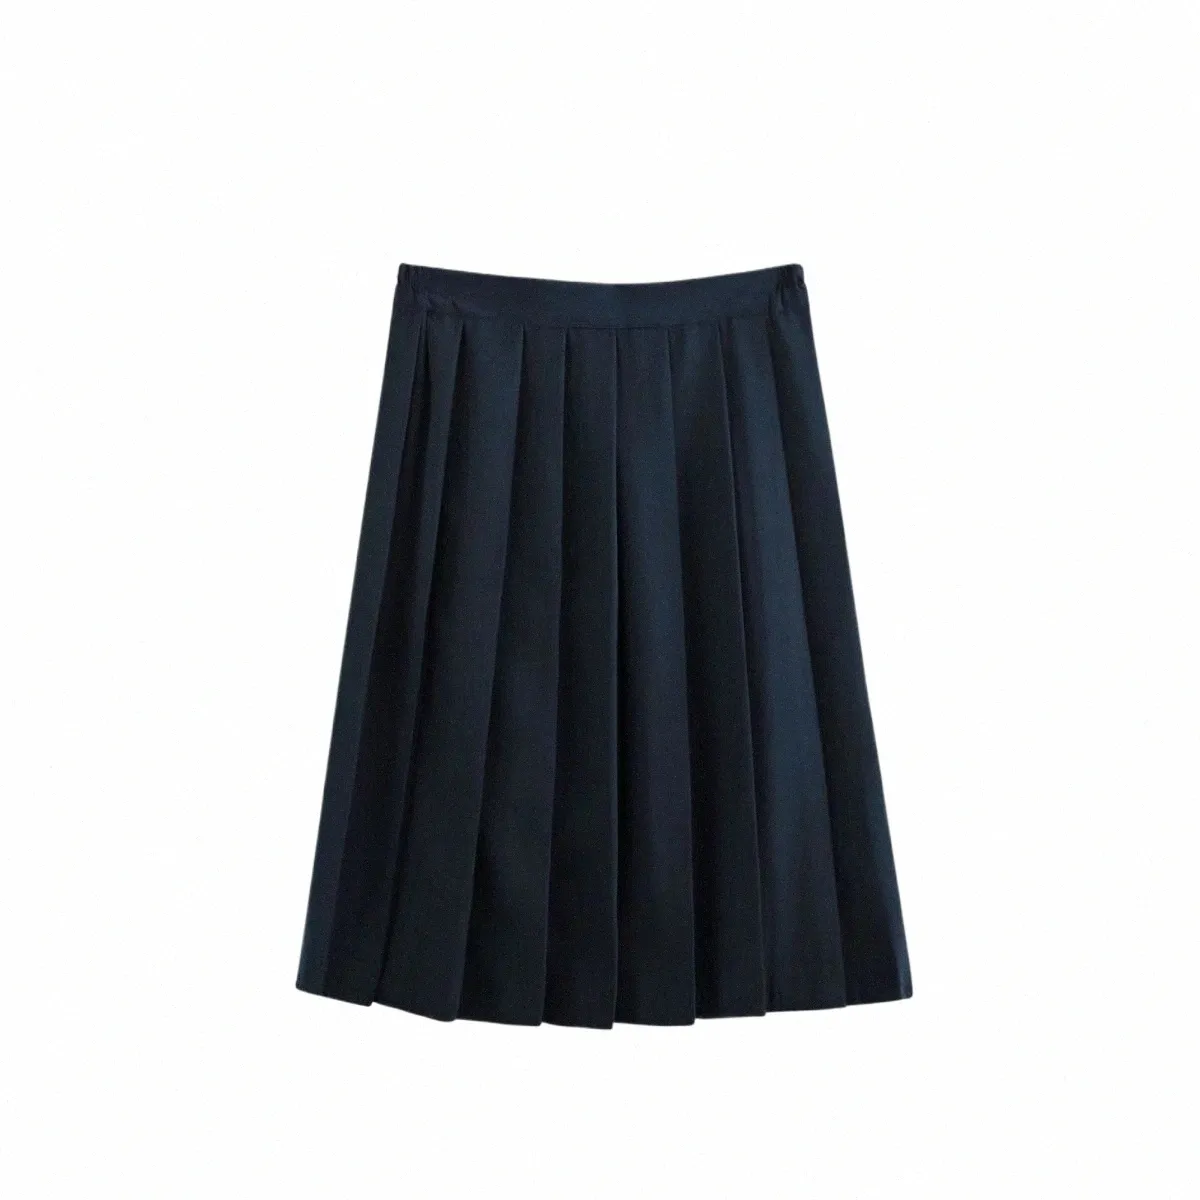 Nowe dziewczyny JK Sailor School School mundure LG plisowane spódnice pod kolanami liceum granatowa czarna solidna spódnica 5xl u1p2#